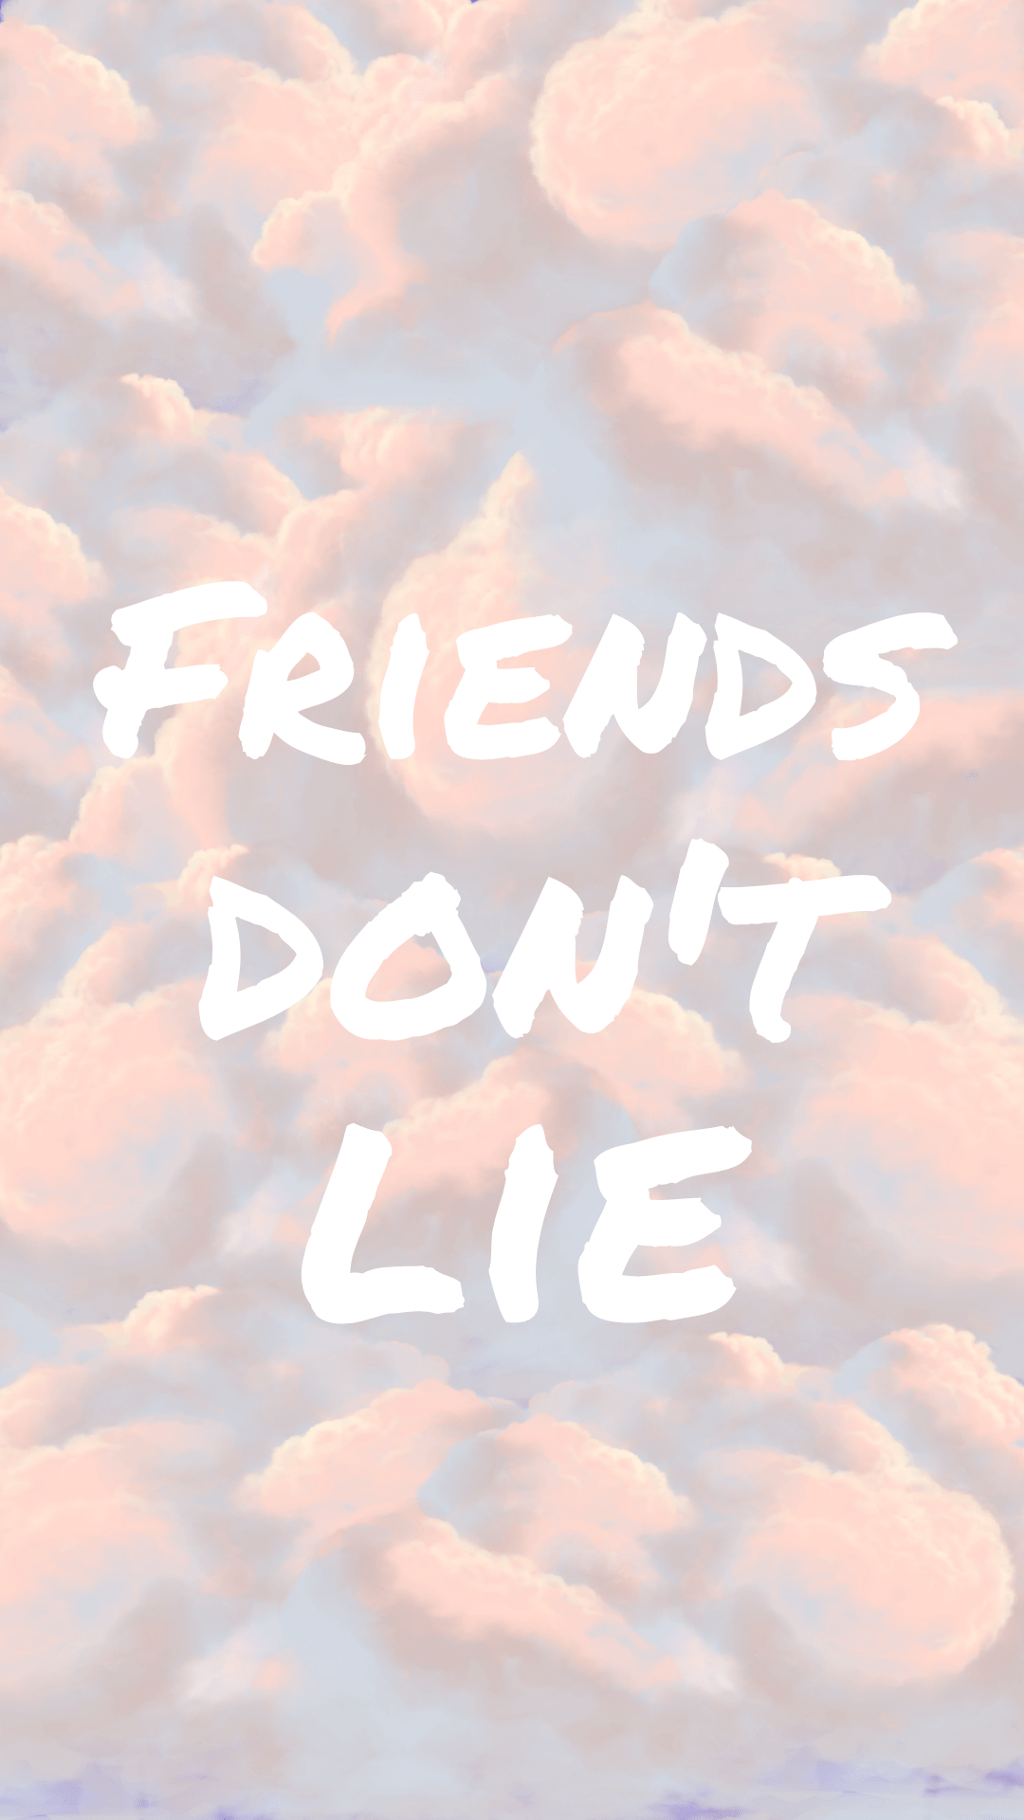 Friends Don't Lie Wallpapers - Top Free Friends Don't Lie Backgrounds ...